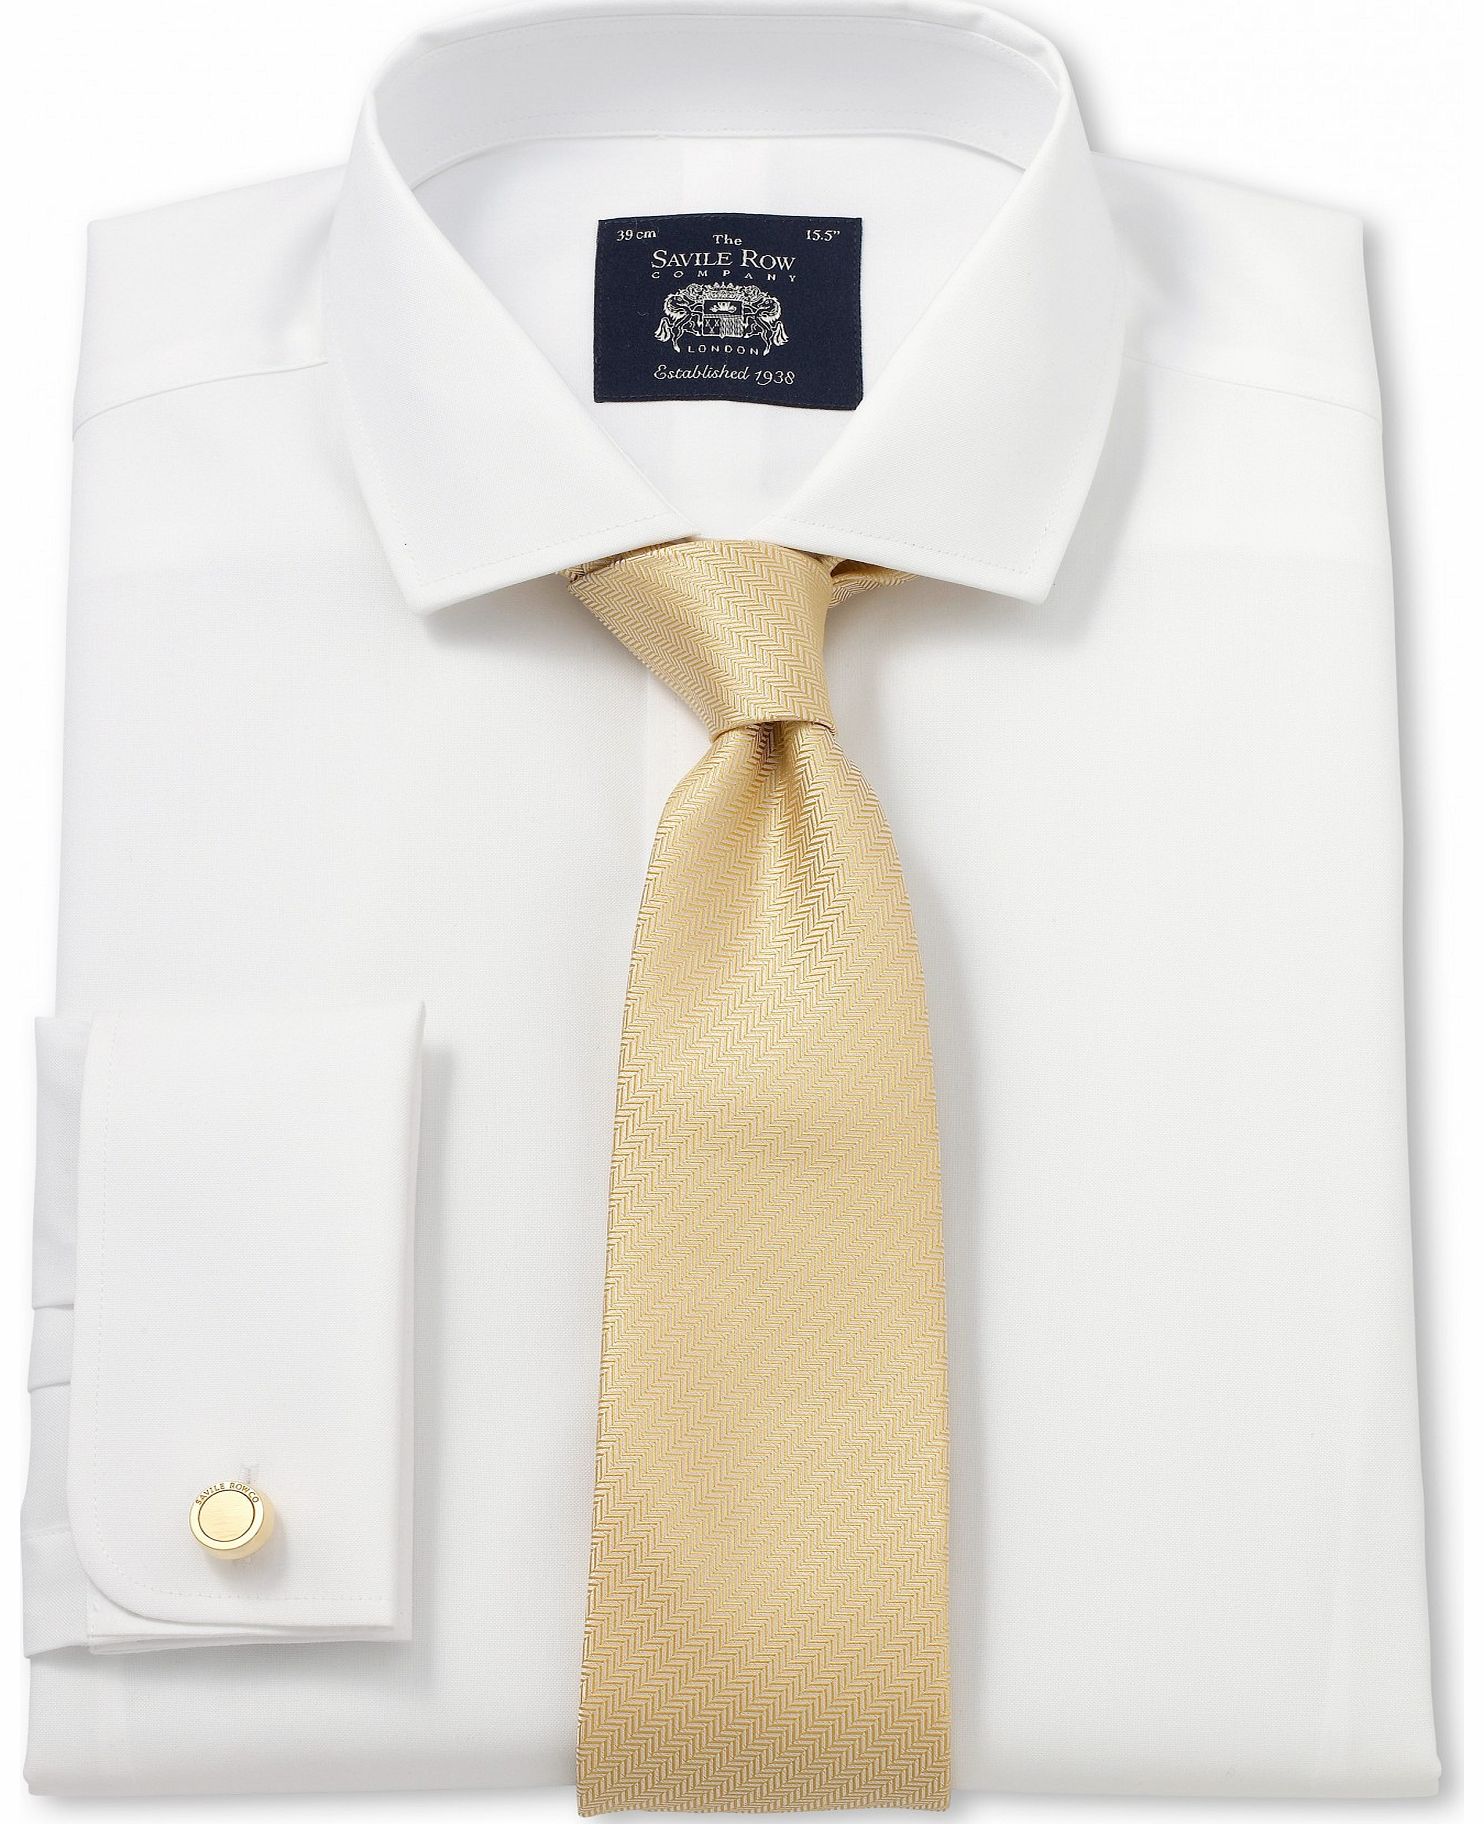 Savile Row Company White Poplin Non Iron Extra Slim Fit Shirt 15